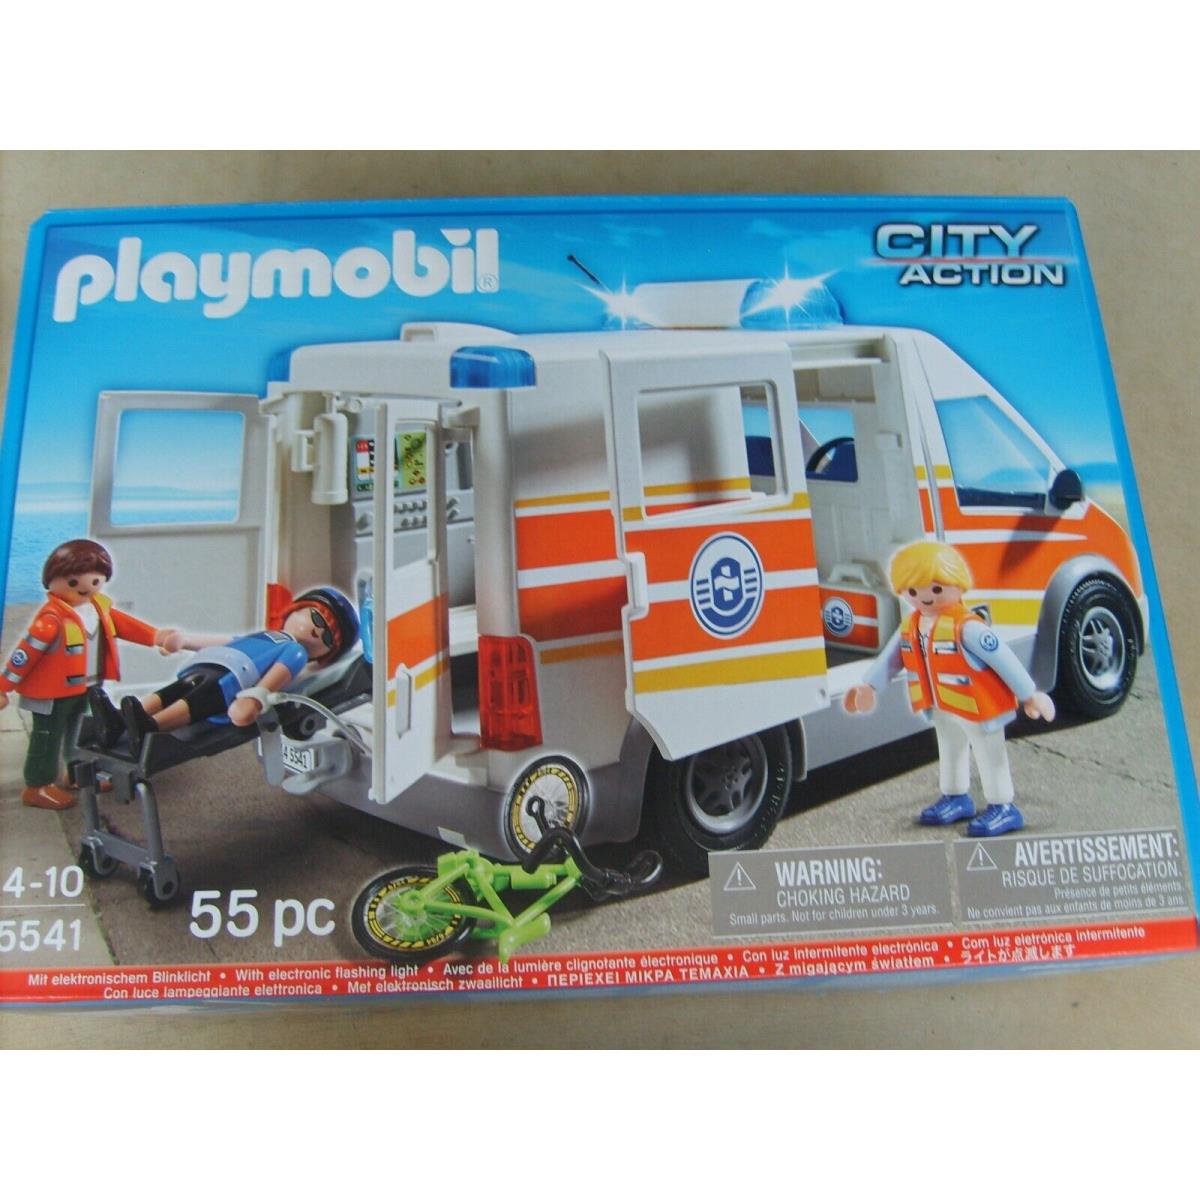 Playmobil 5541 Ambulance Rescue with Siren Orange Paramedic Figures Hospital